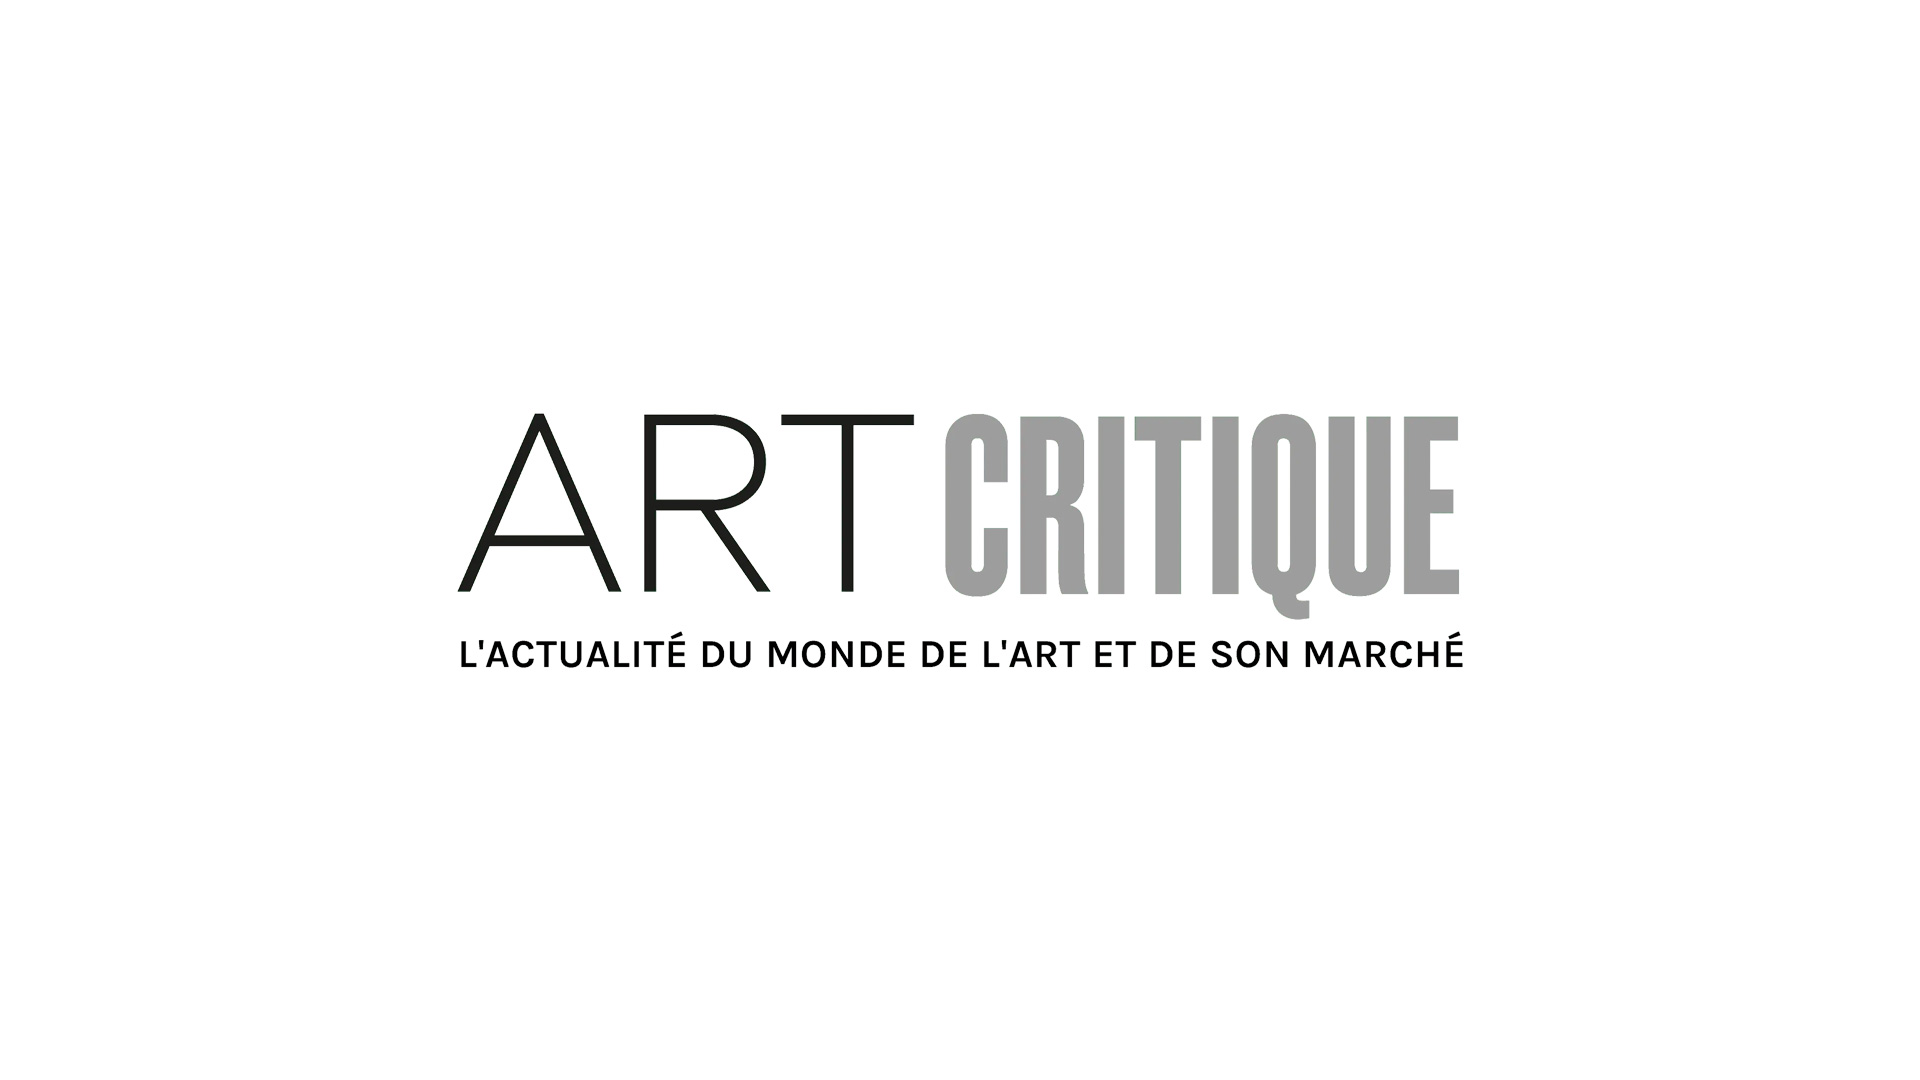 Baltimore Museum of Art announces a center dedicated to Henri Matisse